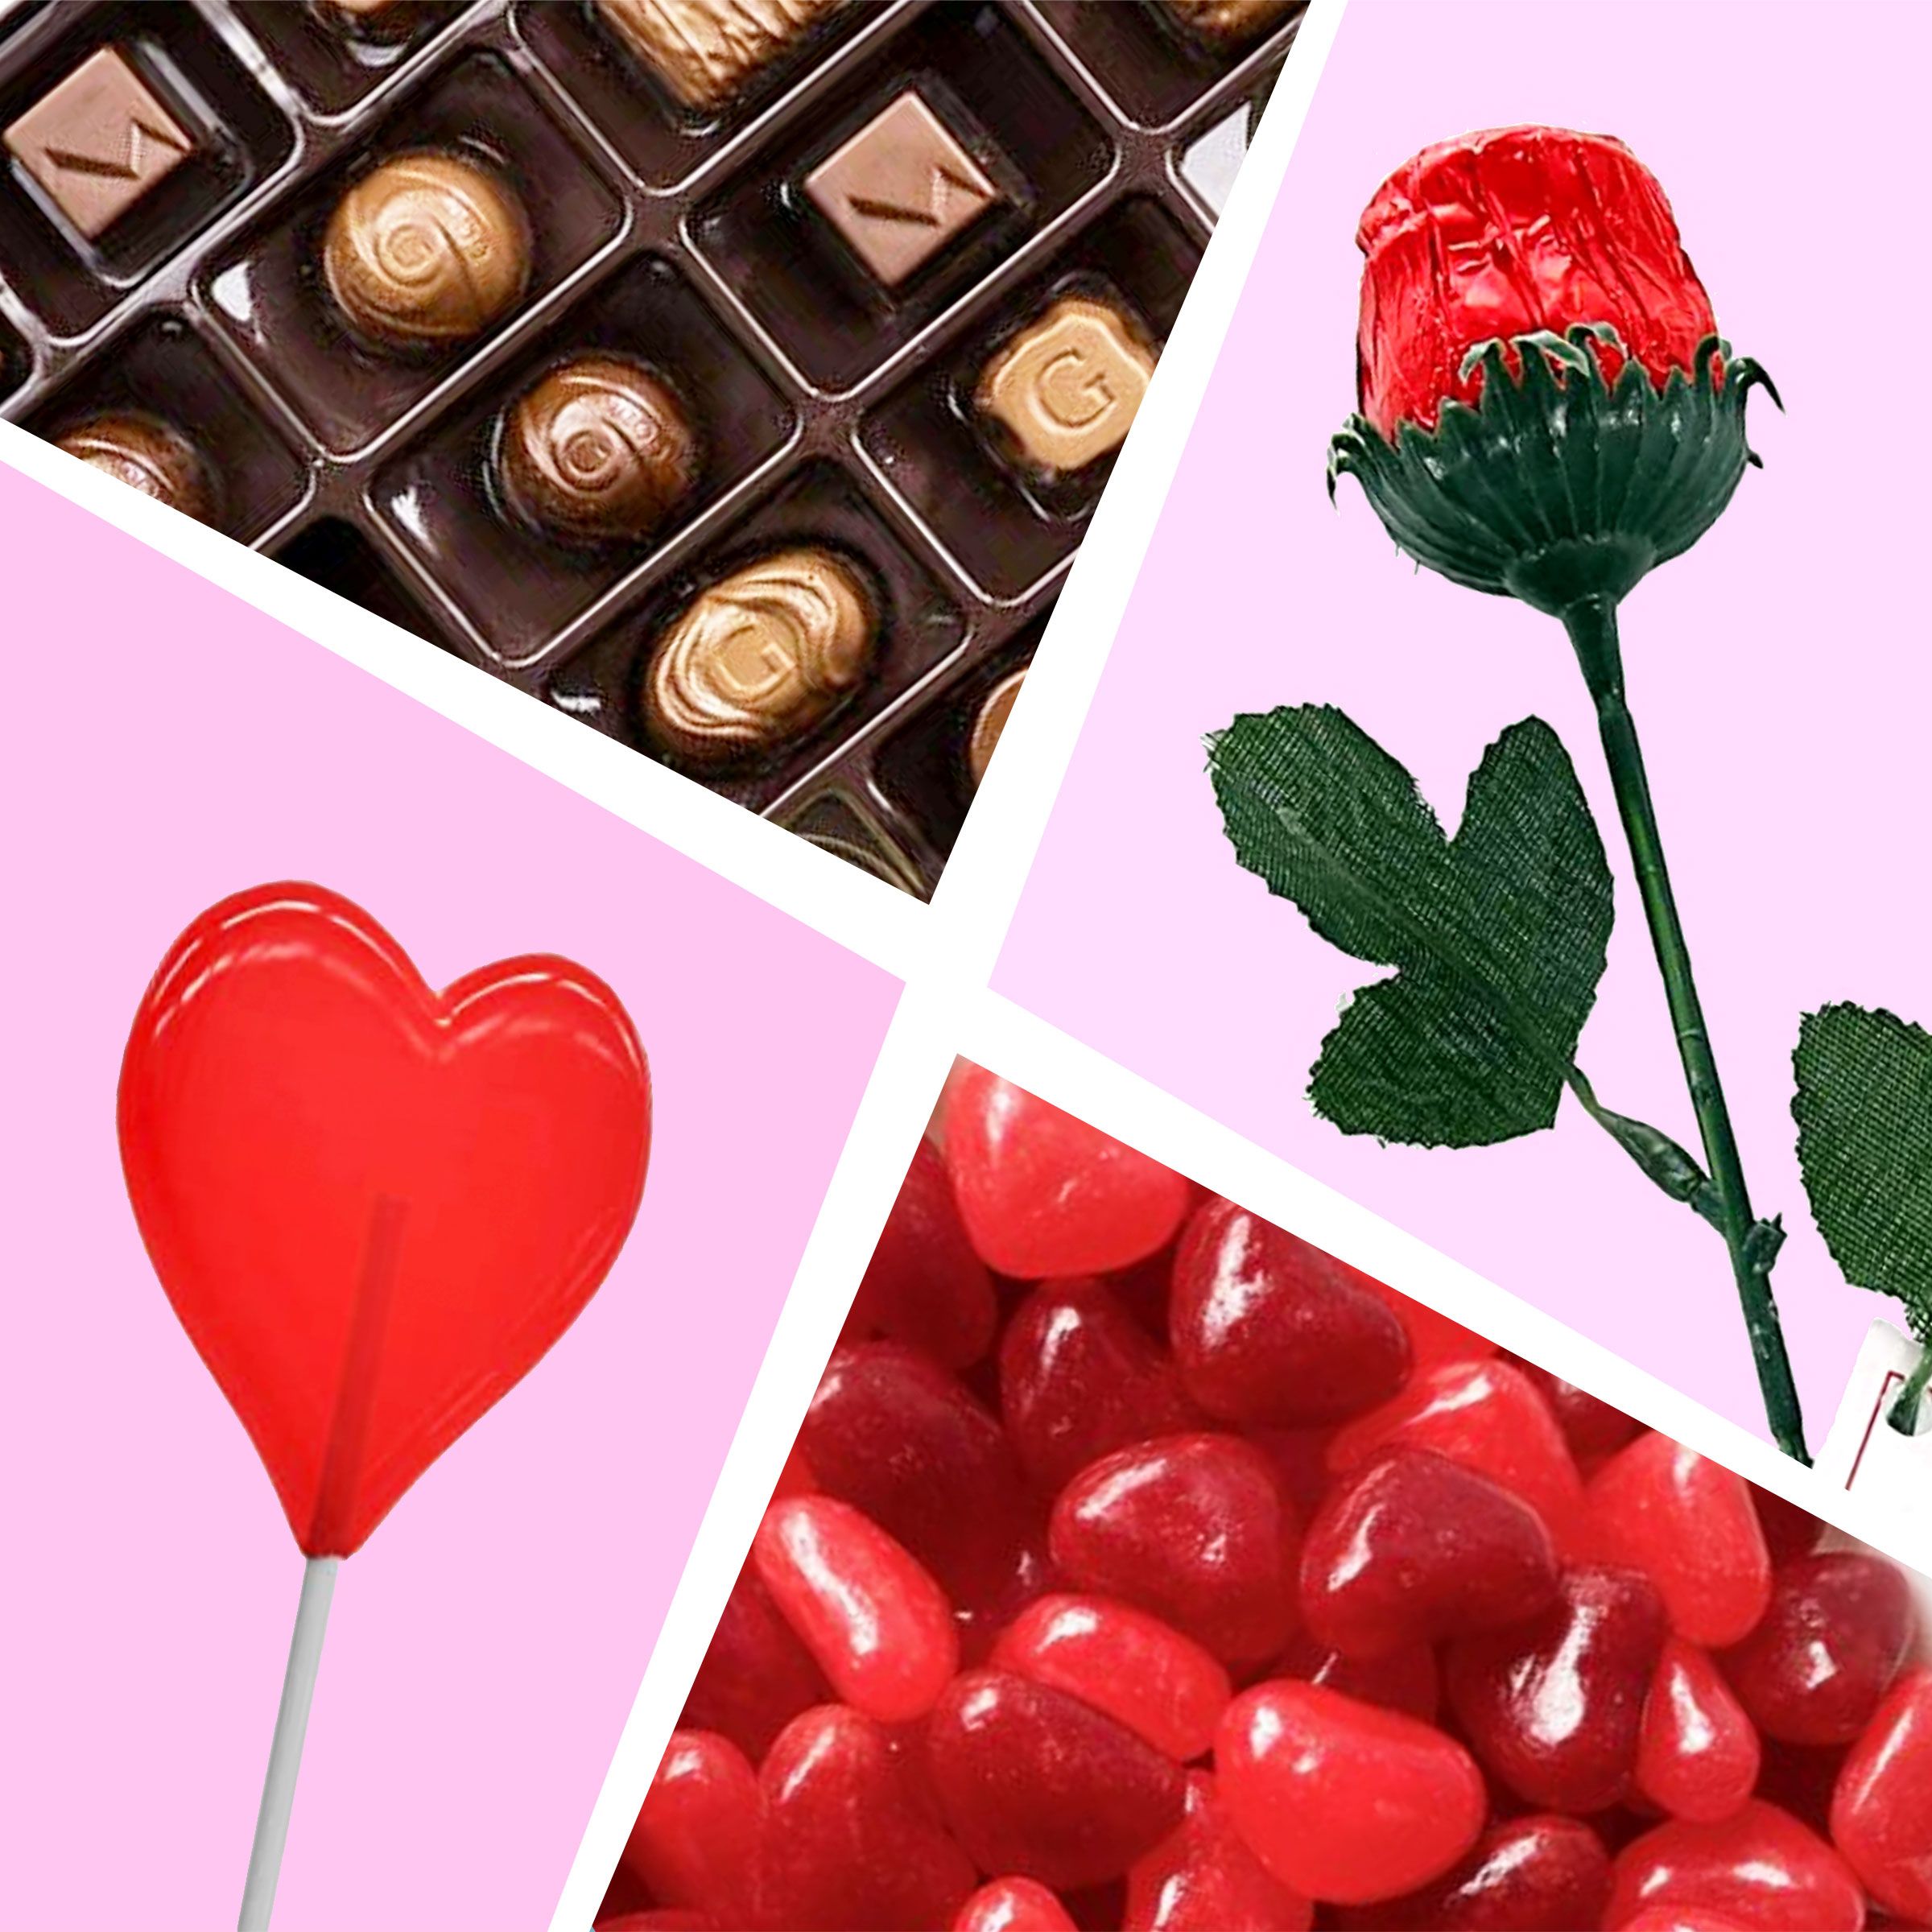 M&M'S Milk Chocolate Valentines Day Cupid's Mix Valentine Candy